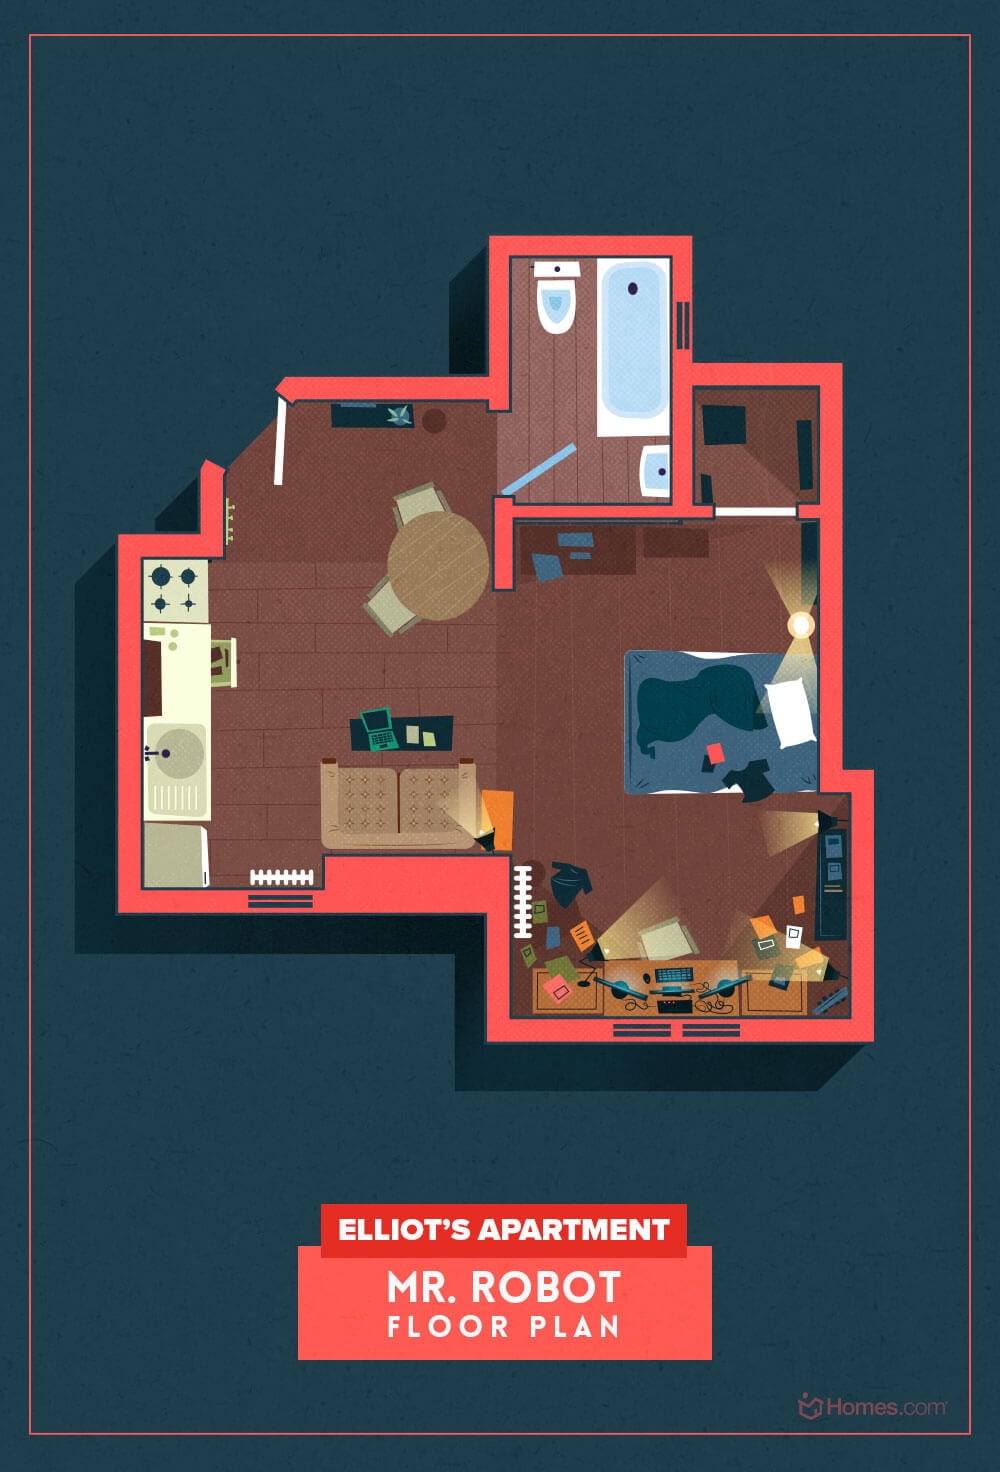 home-floor-plans-illustrations-5